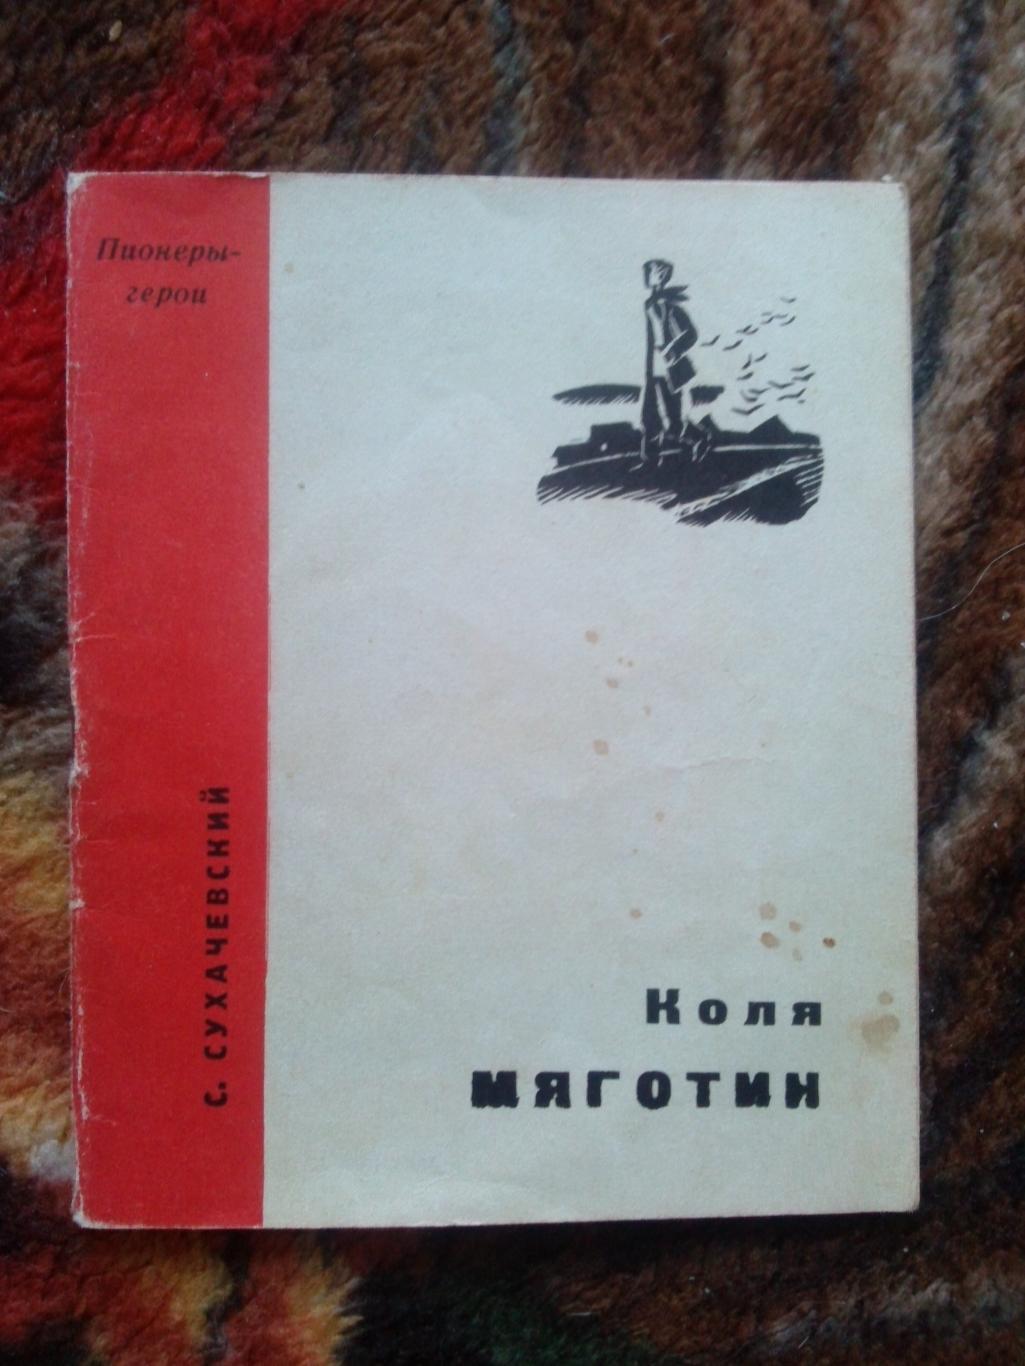 Пионеры-герои (Плакат + брошюра) 1967 г. Коля Мяготин (Пионер , агитация) 3